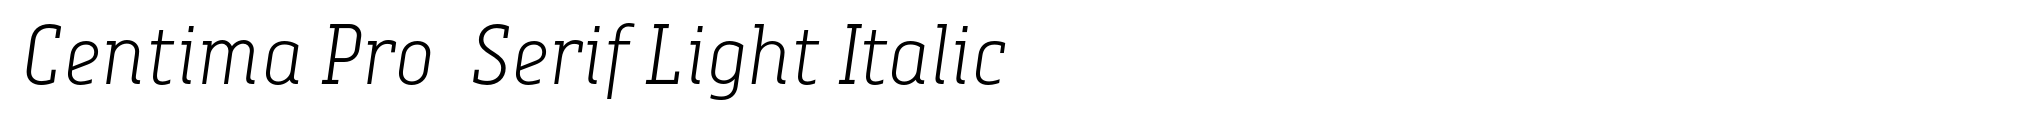 Centima Pro  Serif Light Italic image